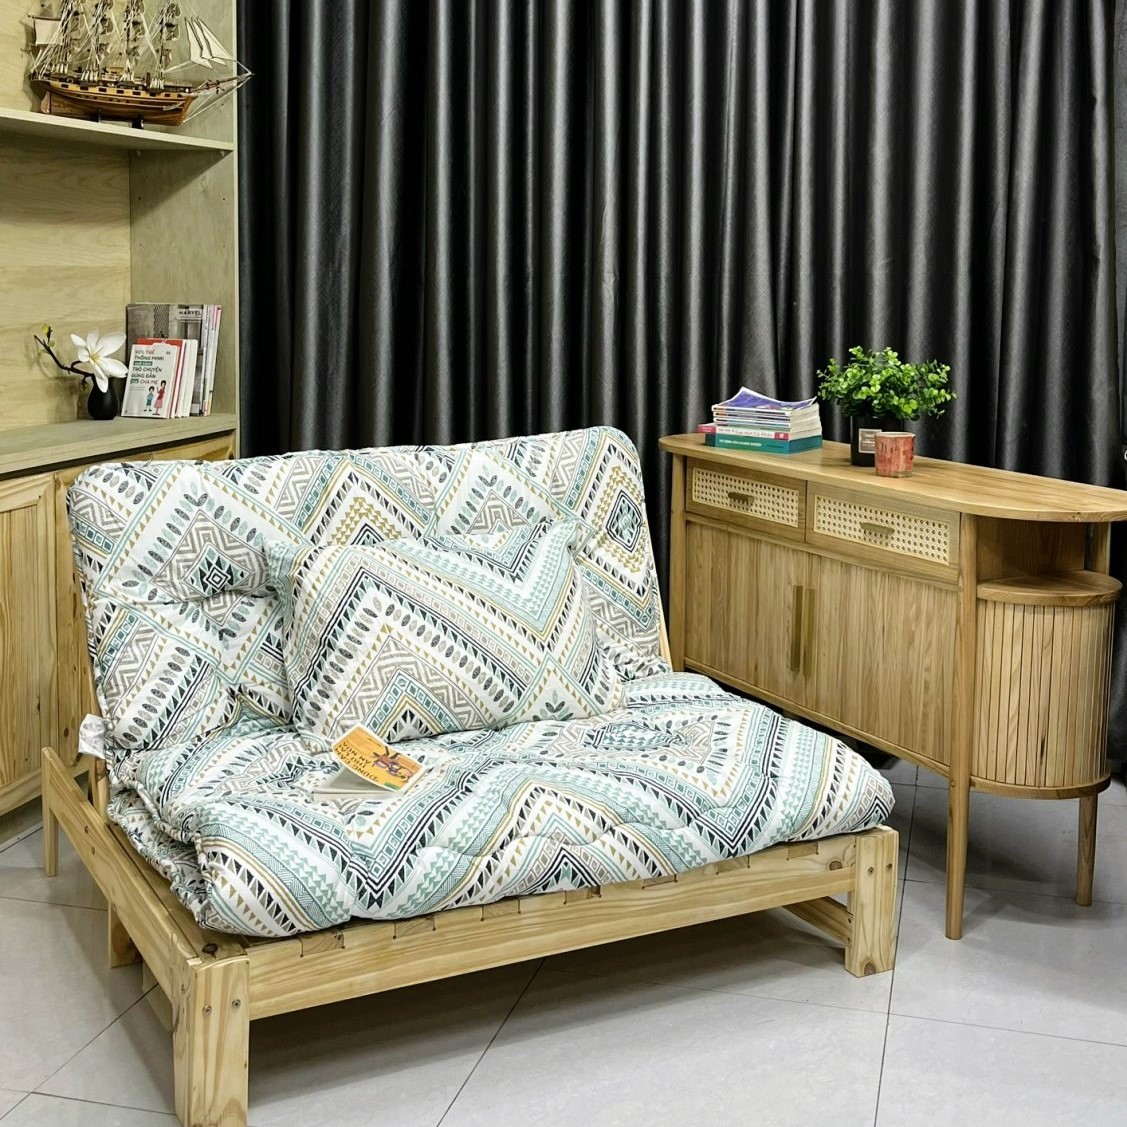 Sofa Bed gỗ tự nhiên